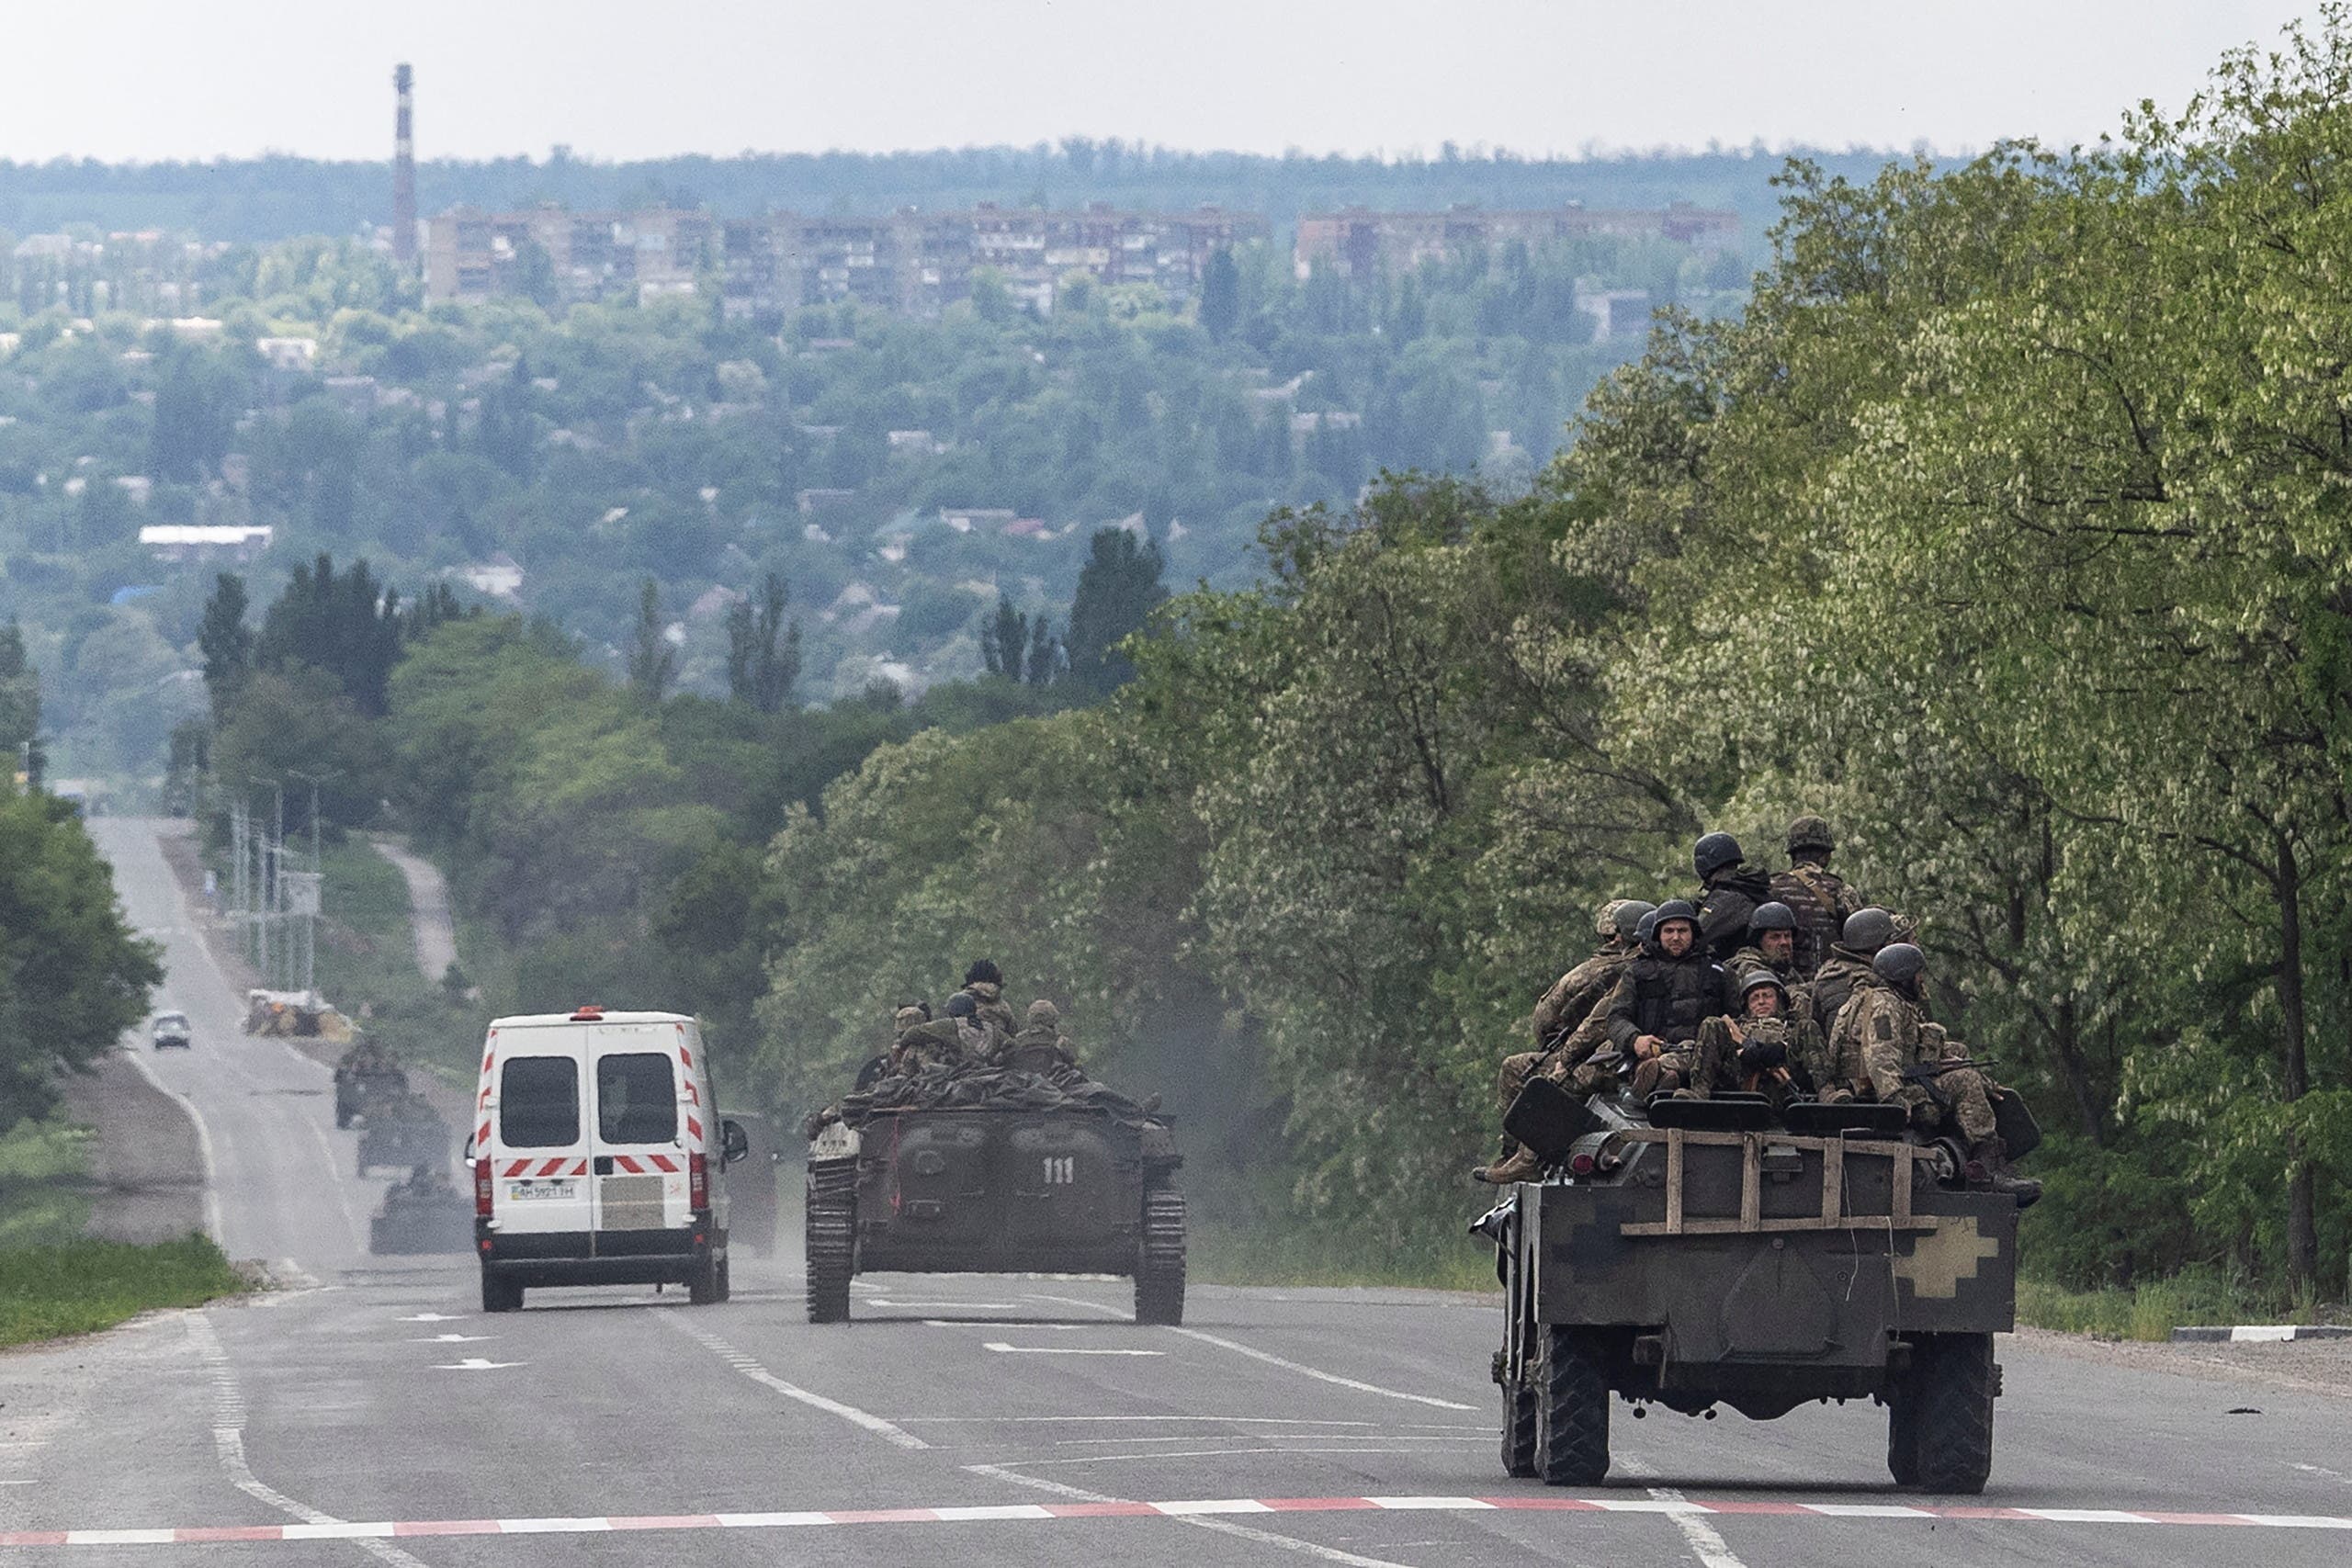 Scenes from Ukraine - elements of the Ukrainian army 